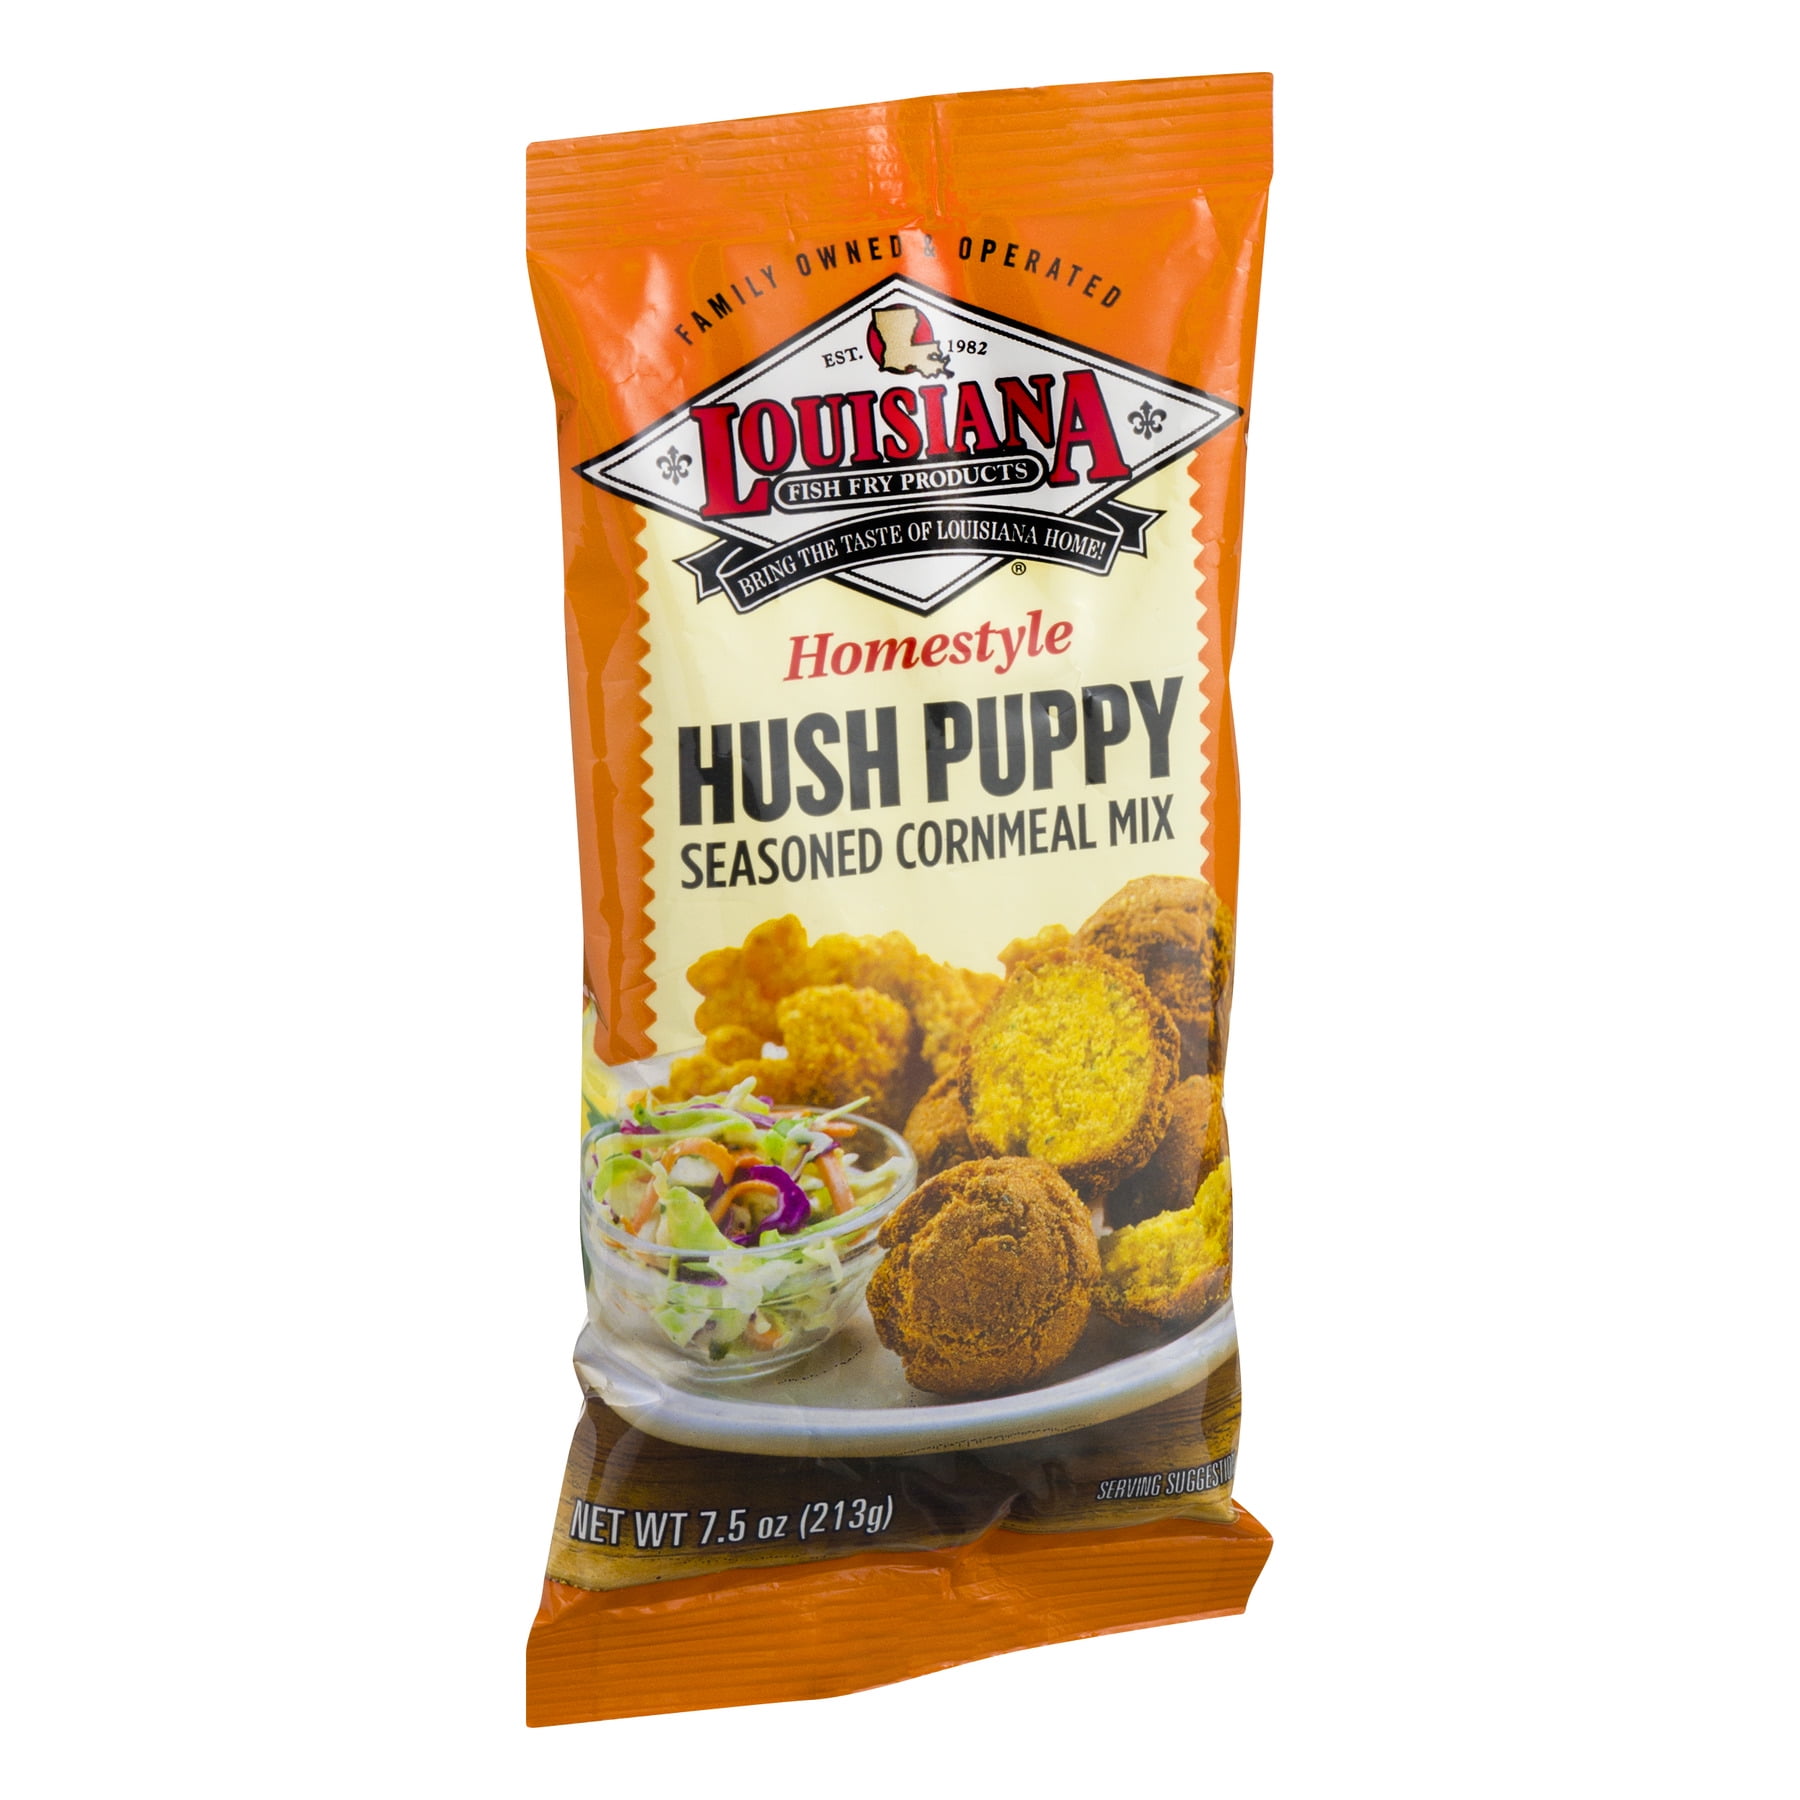 regiment God følelse gårdsplads 3 Pack) Louisiana Homestyle Hush Puppy Seasoned Cornmeal Mix, 7.5 oz -  Walmart.com